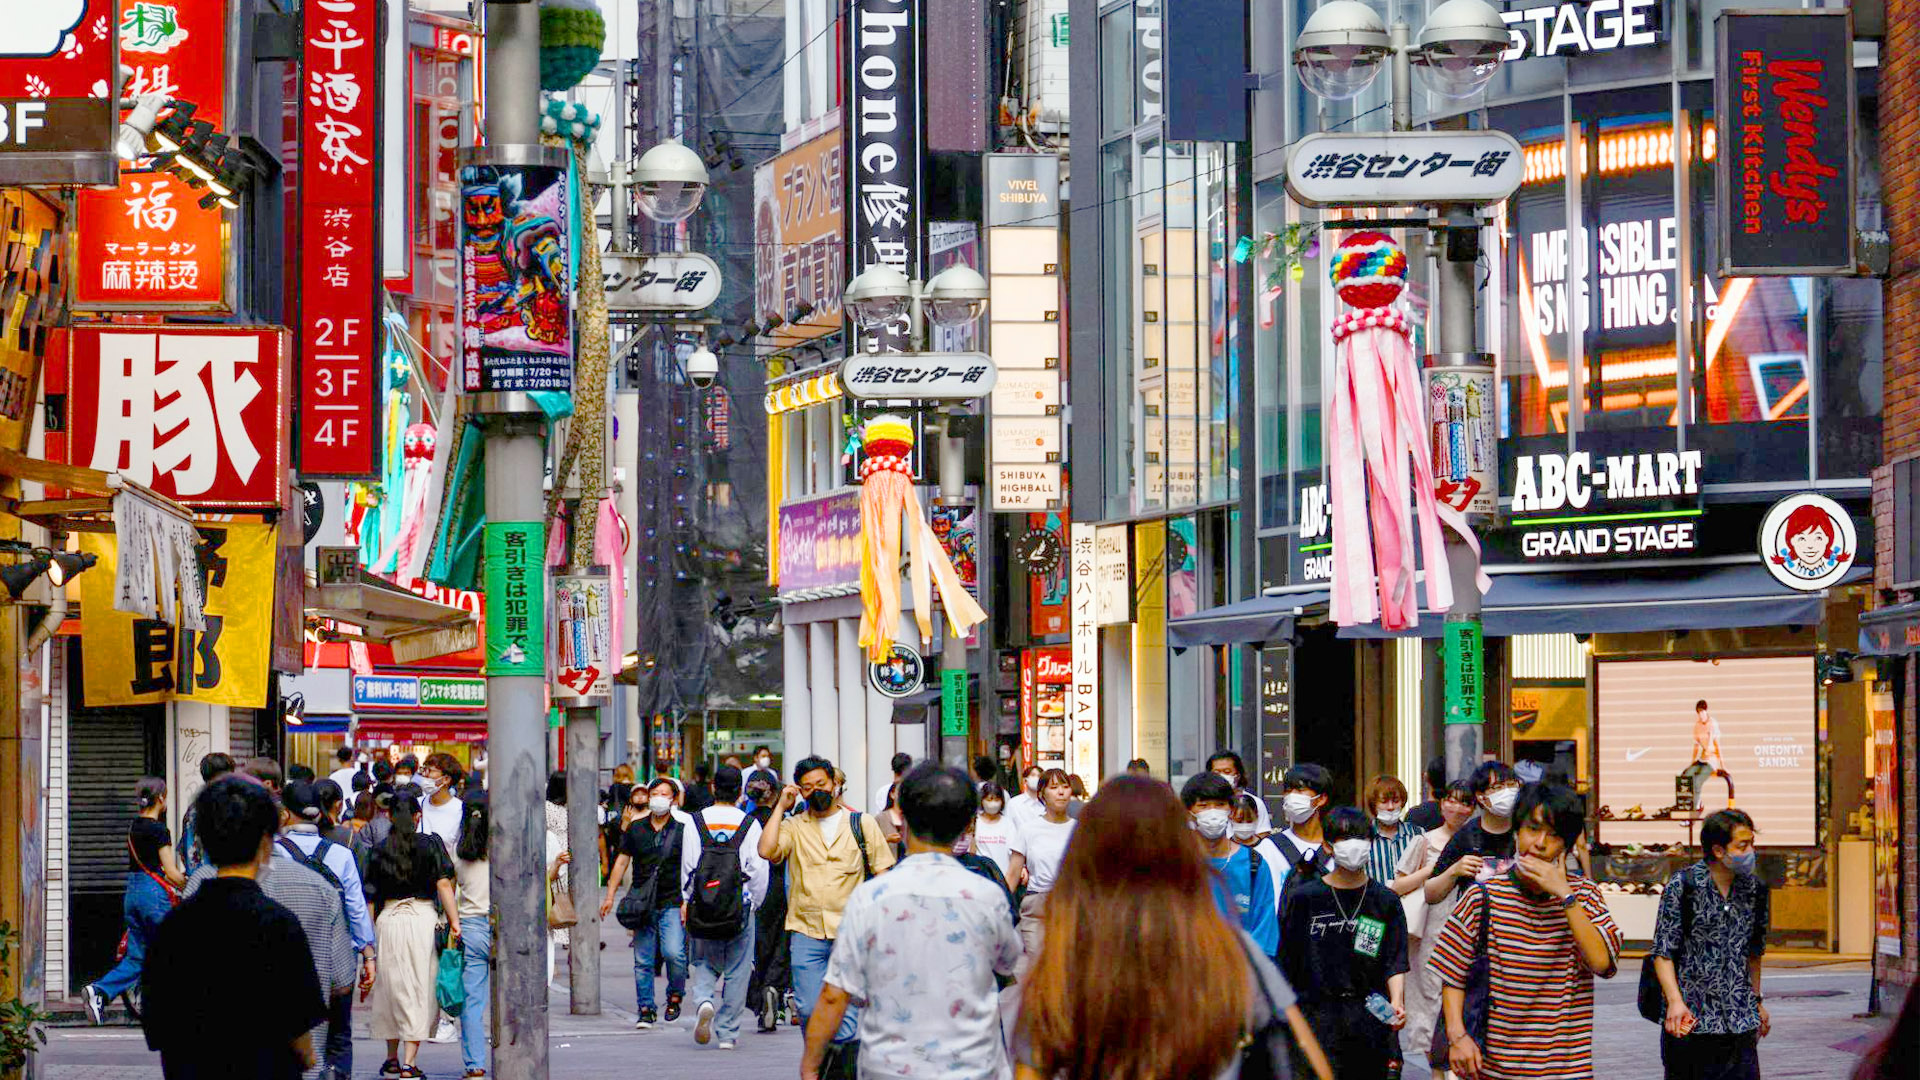 Will Japan's population shrink or swim?